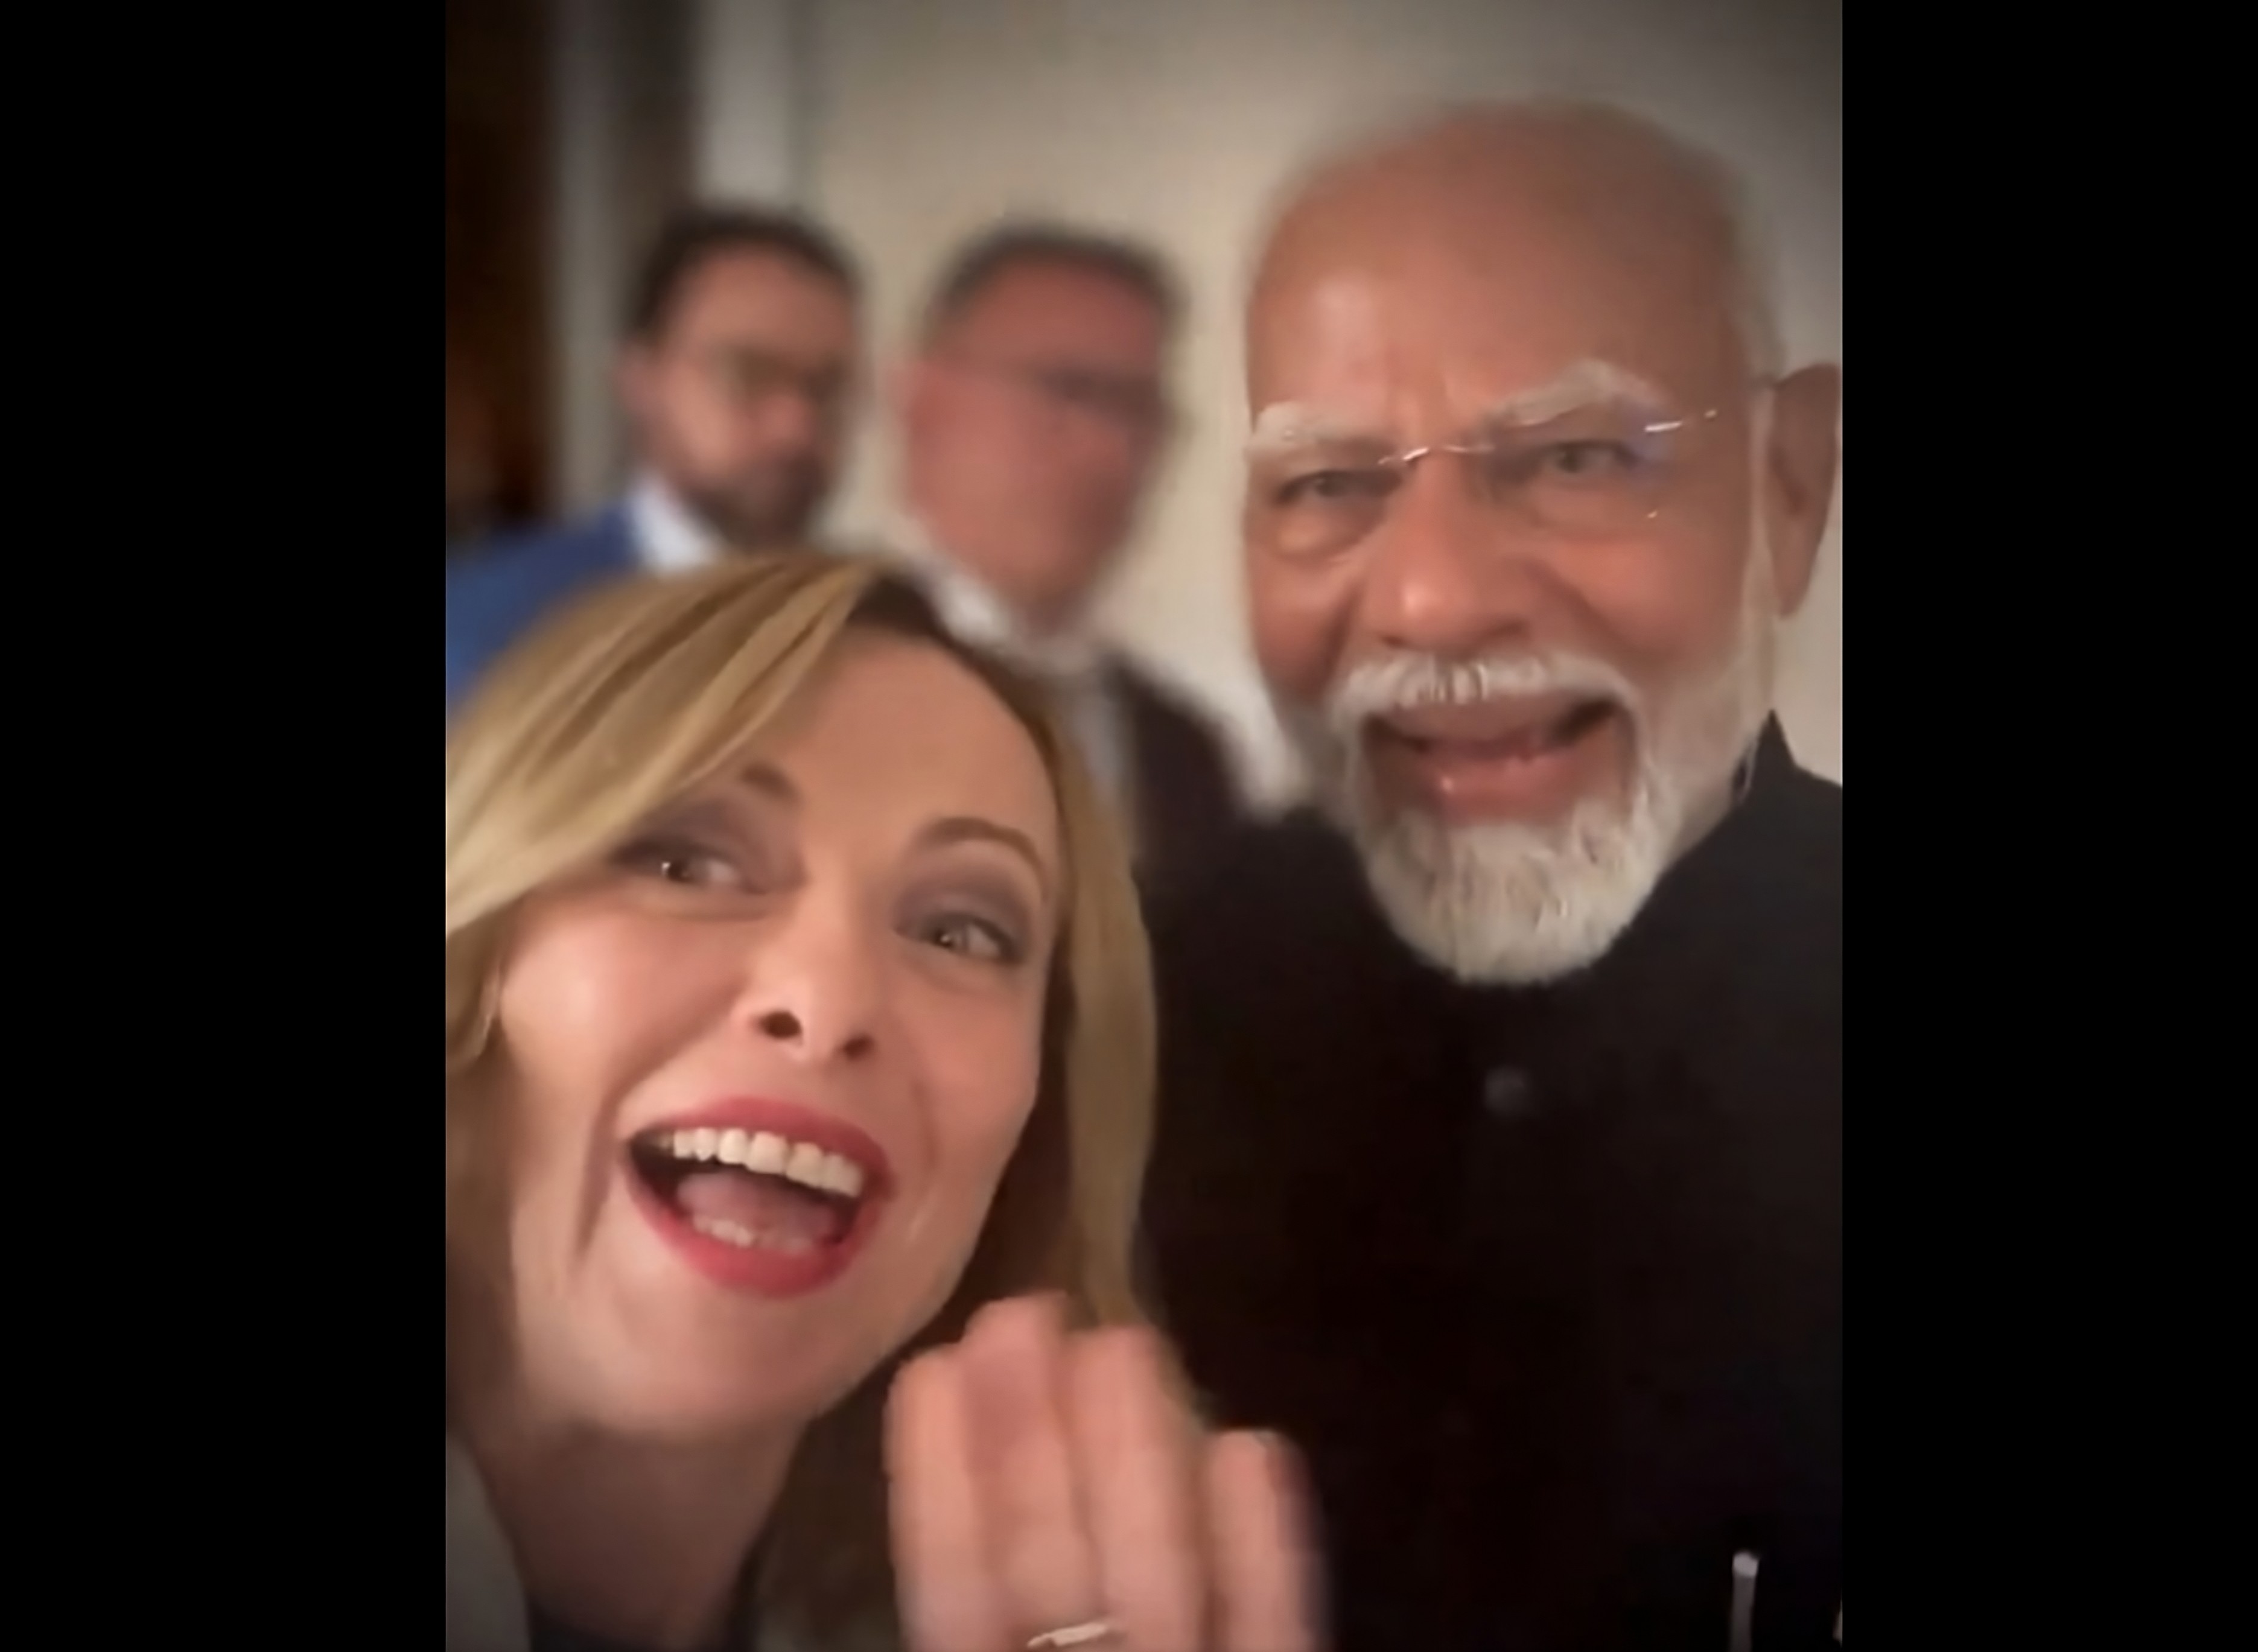 Italy’s Giorgia Meloni shares a smile with India’s Narendra Modi in their viral G7 video. Photo: X/GiorgiaMeloni